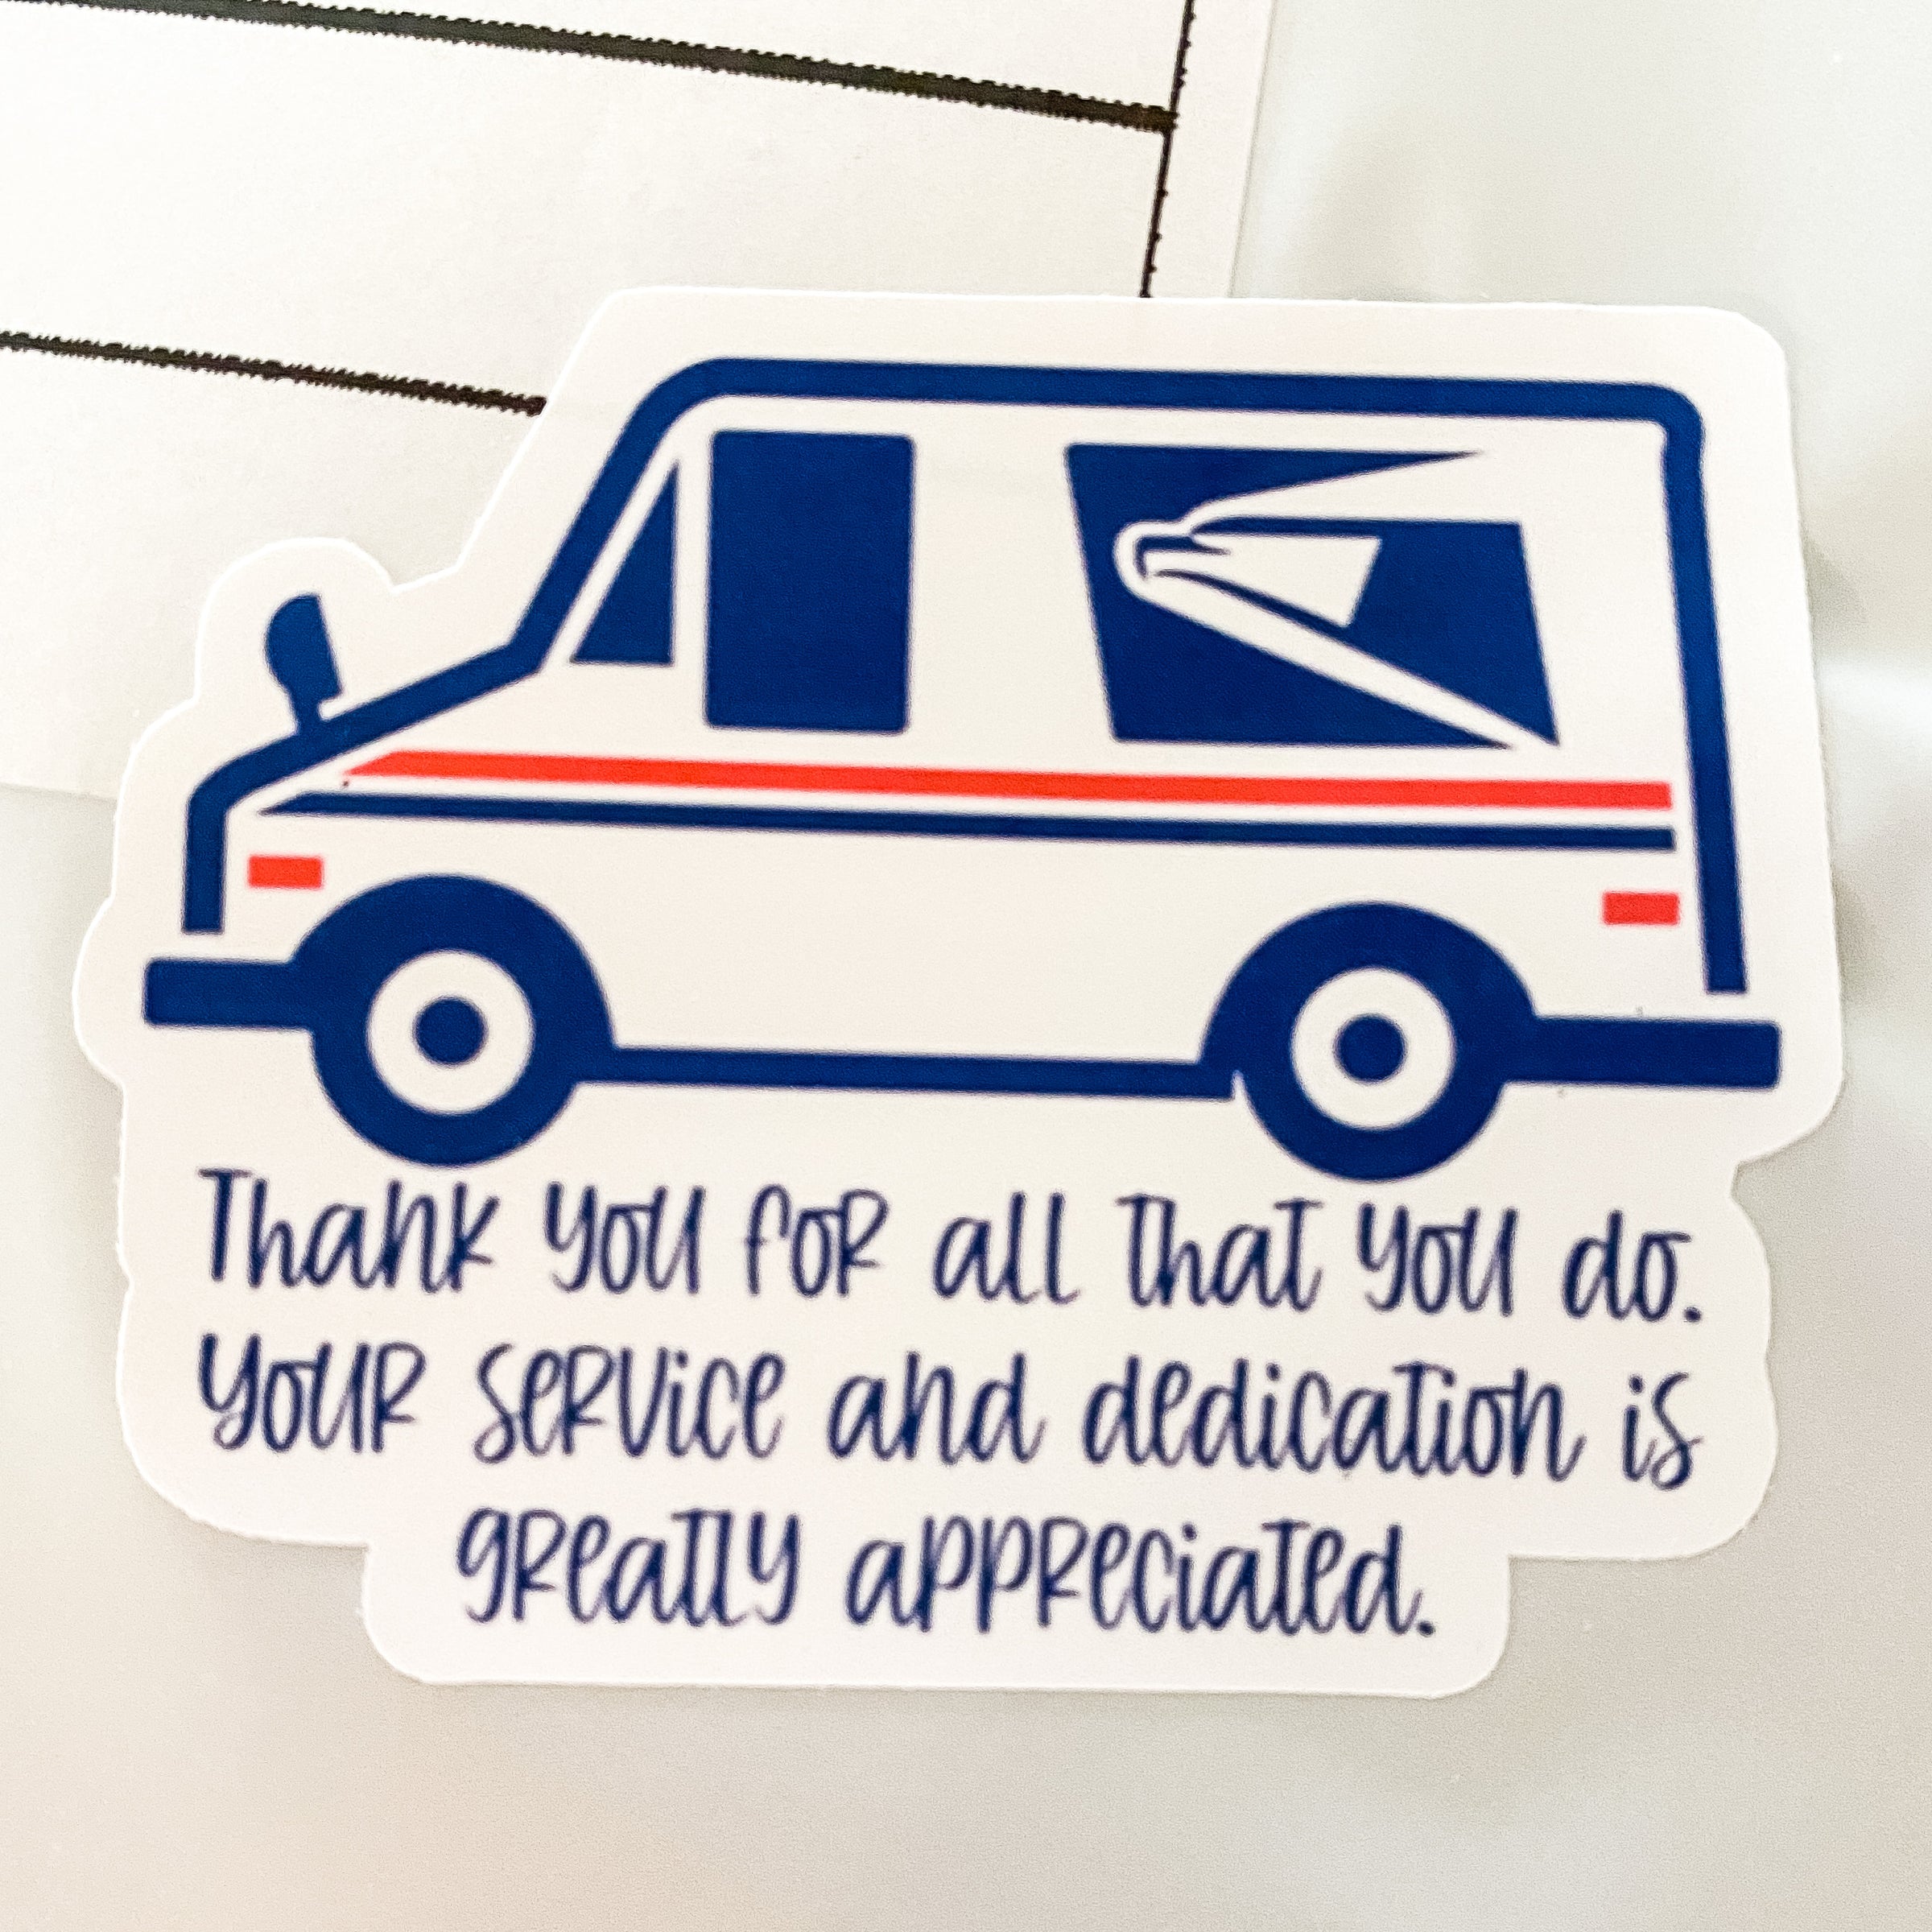 Thank You USPS - Sticker Sheet (15 stickers)